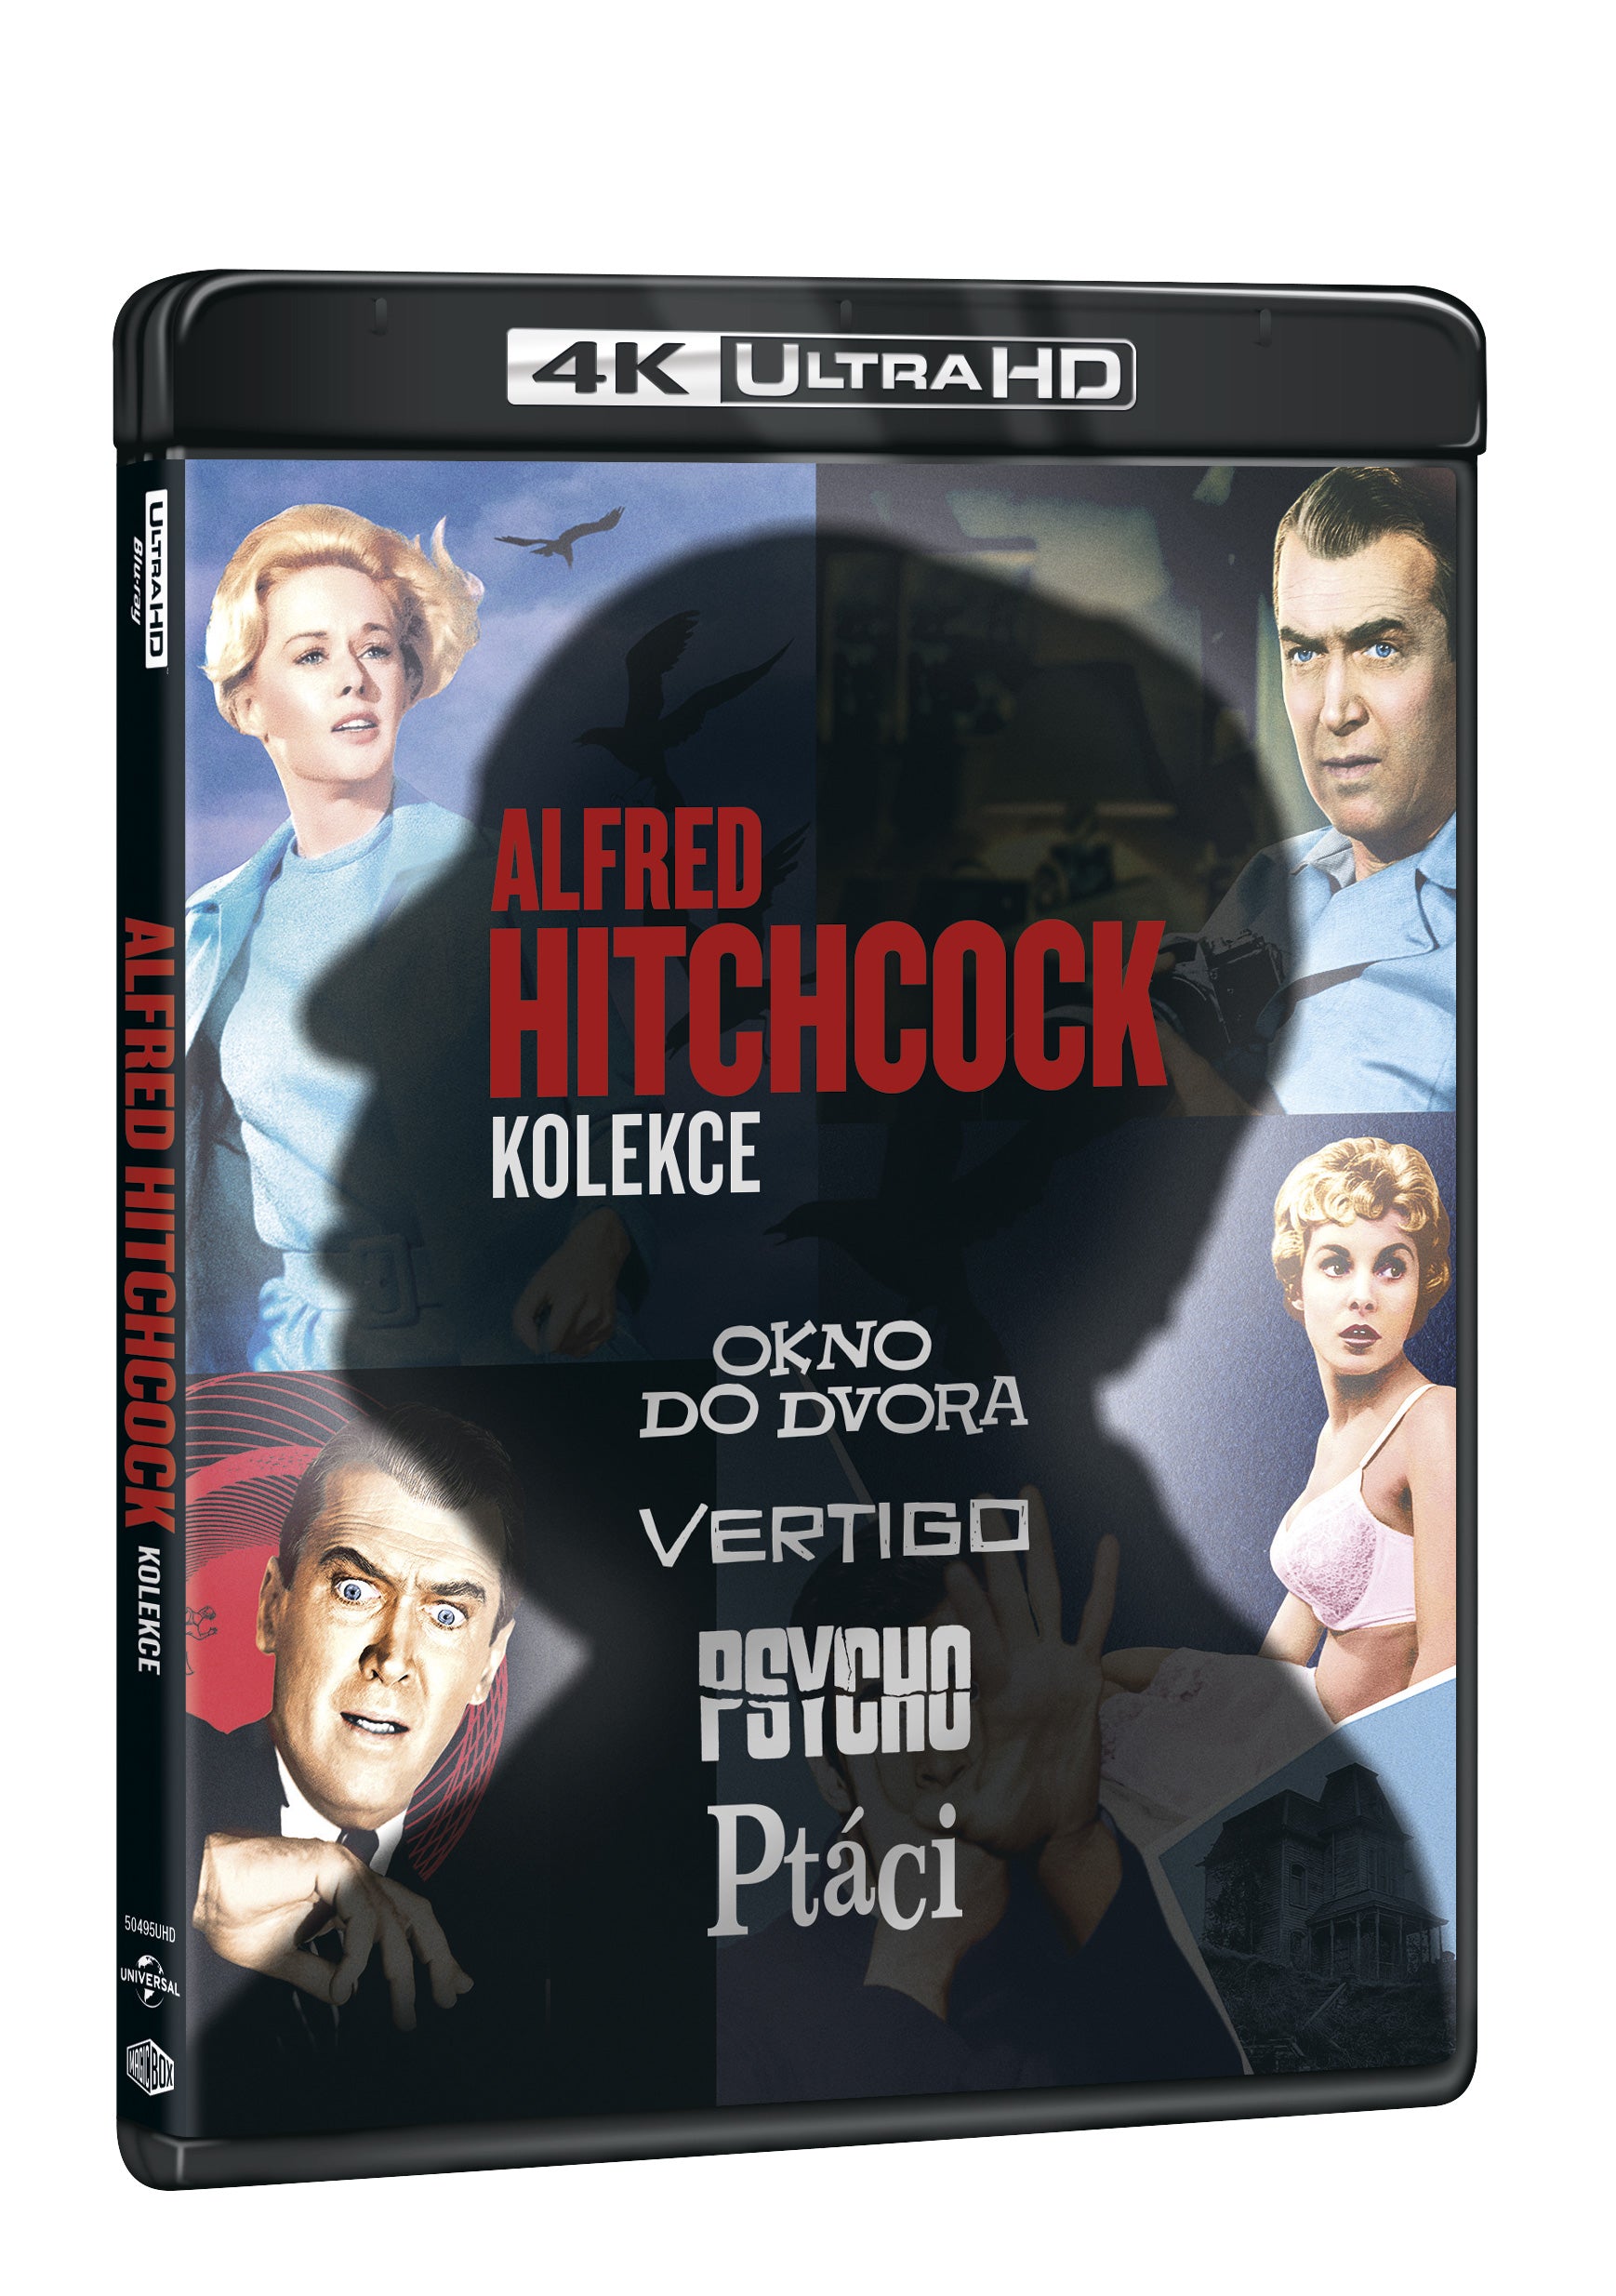 Alfred Hitchcock kolekce 4BD (UHD) / Alfred Hitchcock Collection (Rear Window/Psycho/Vertigo/Birds) - Czech version